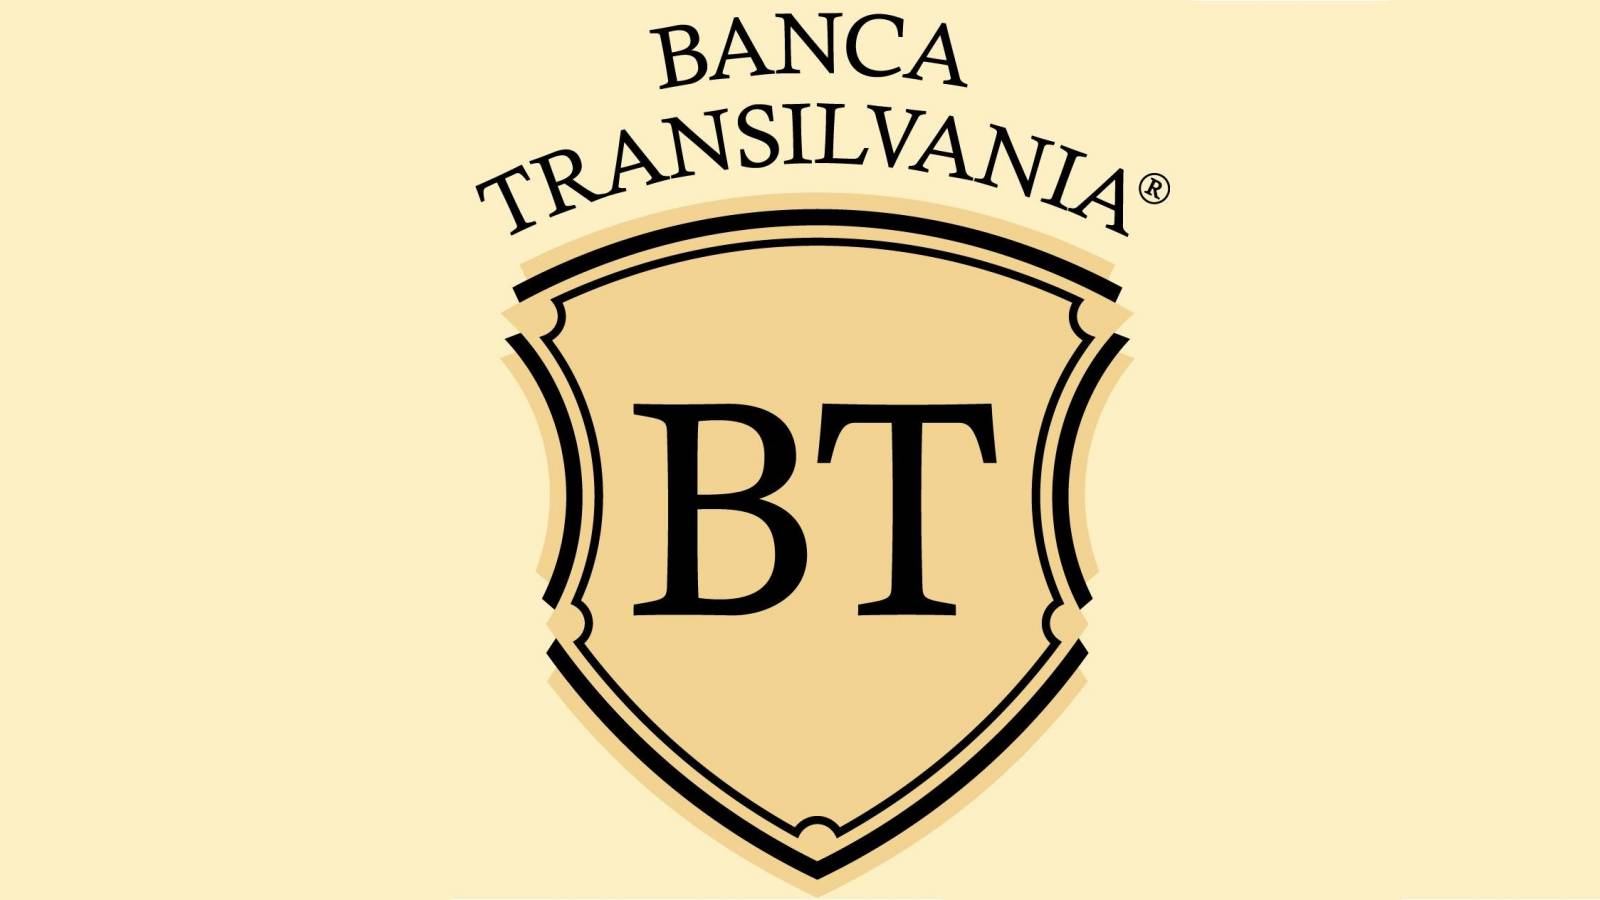 BANCA Transilvania malware